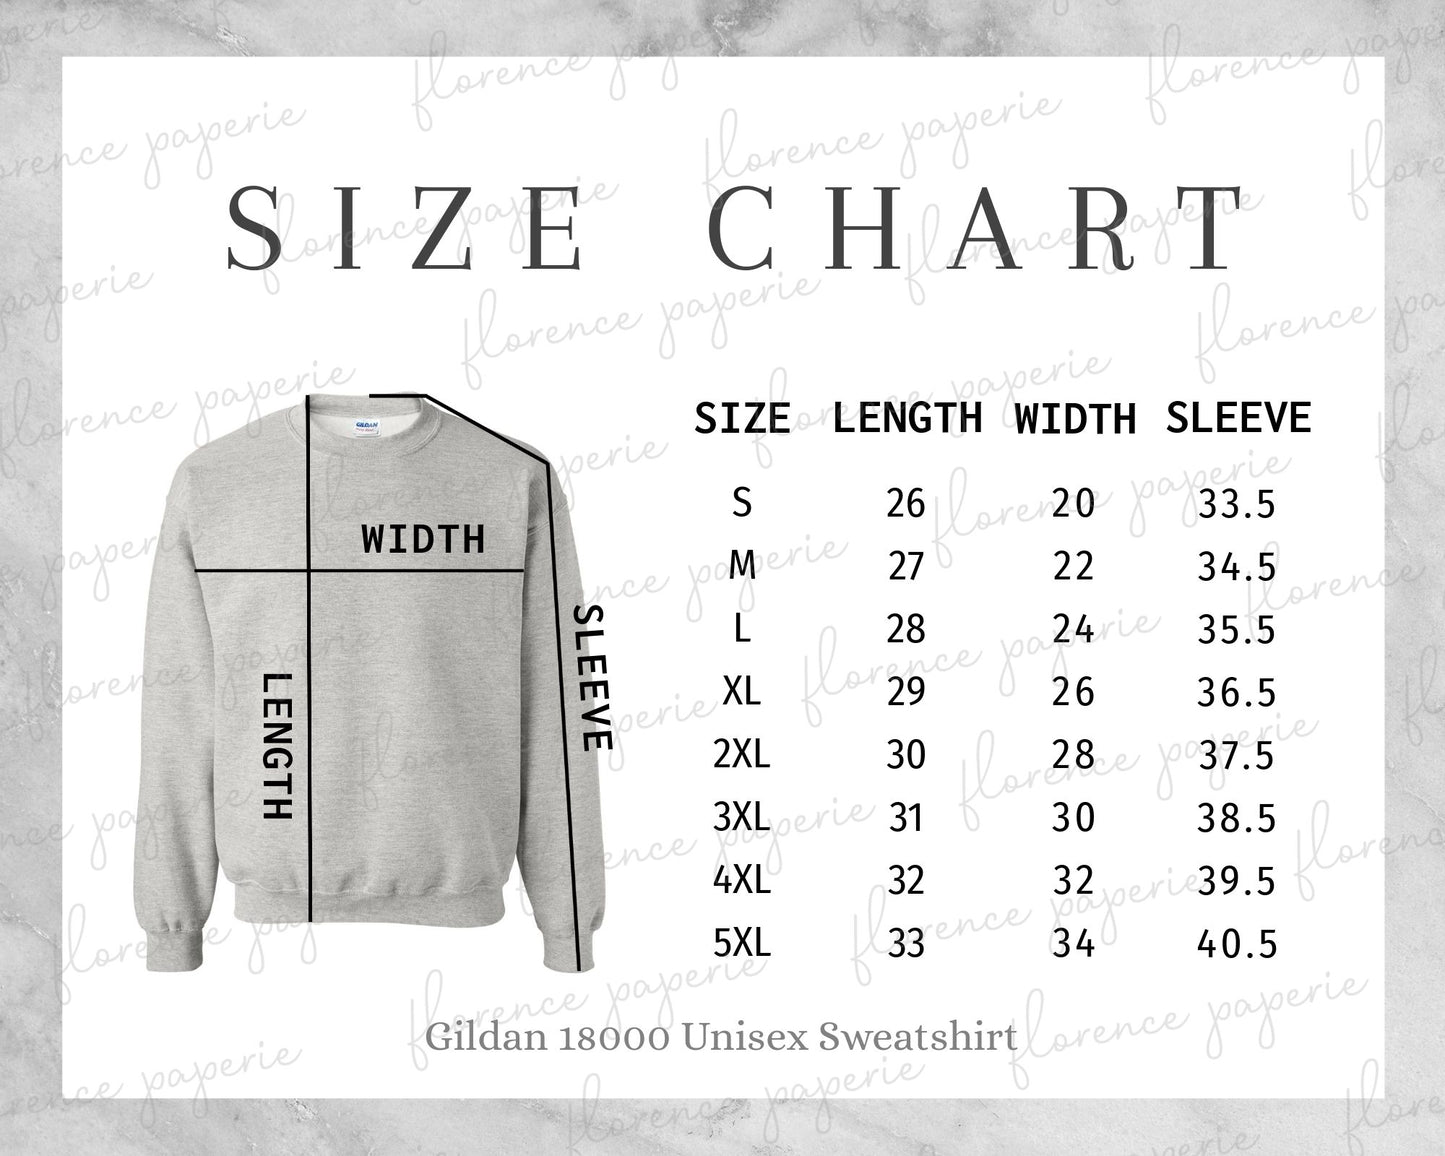 Size chart for this Gildan #18000 sweatshirt